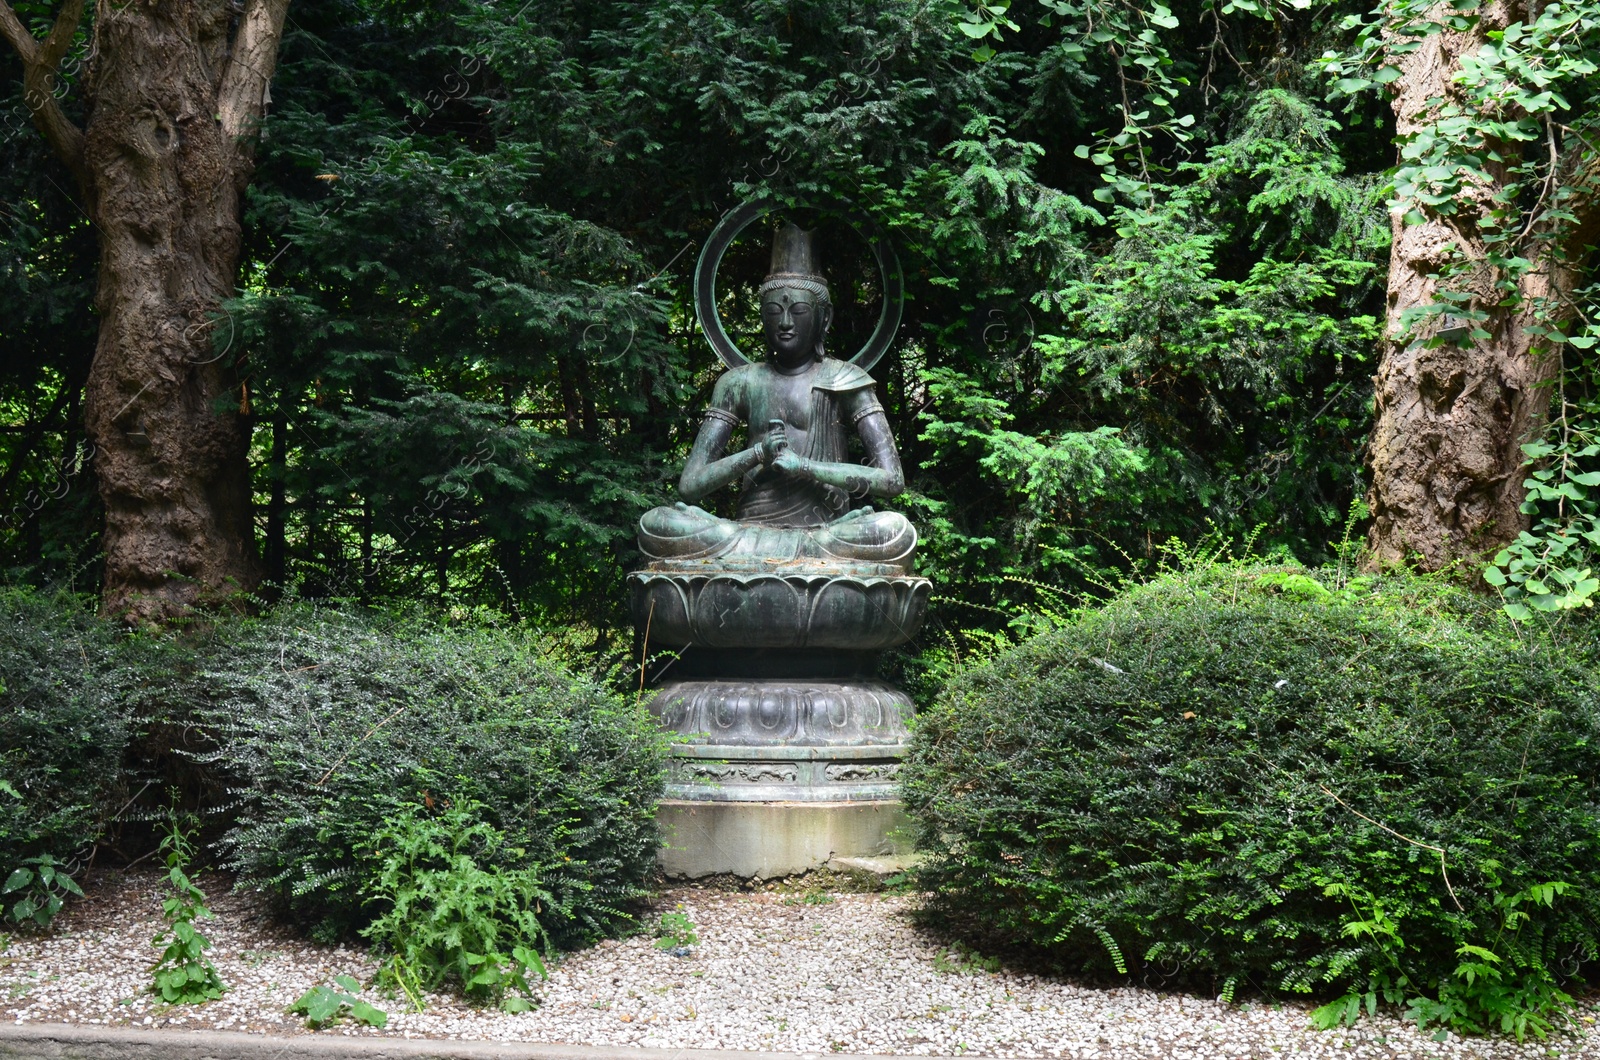 Photo of Bronze statue in park among green vegetation